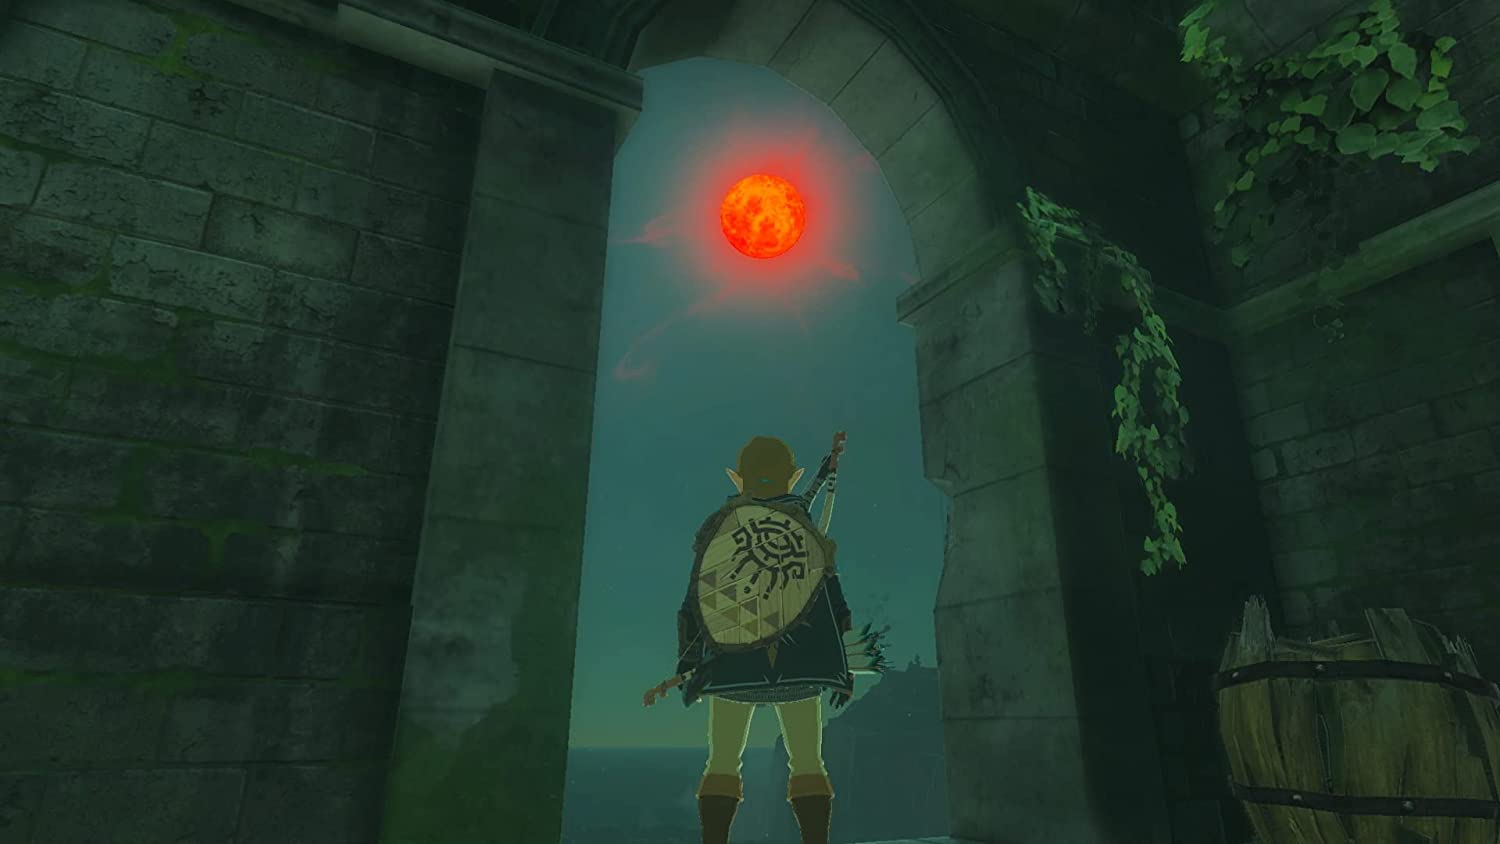 [Nintendo Switch] The Legend of Zelda: Tears of the Kingdom